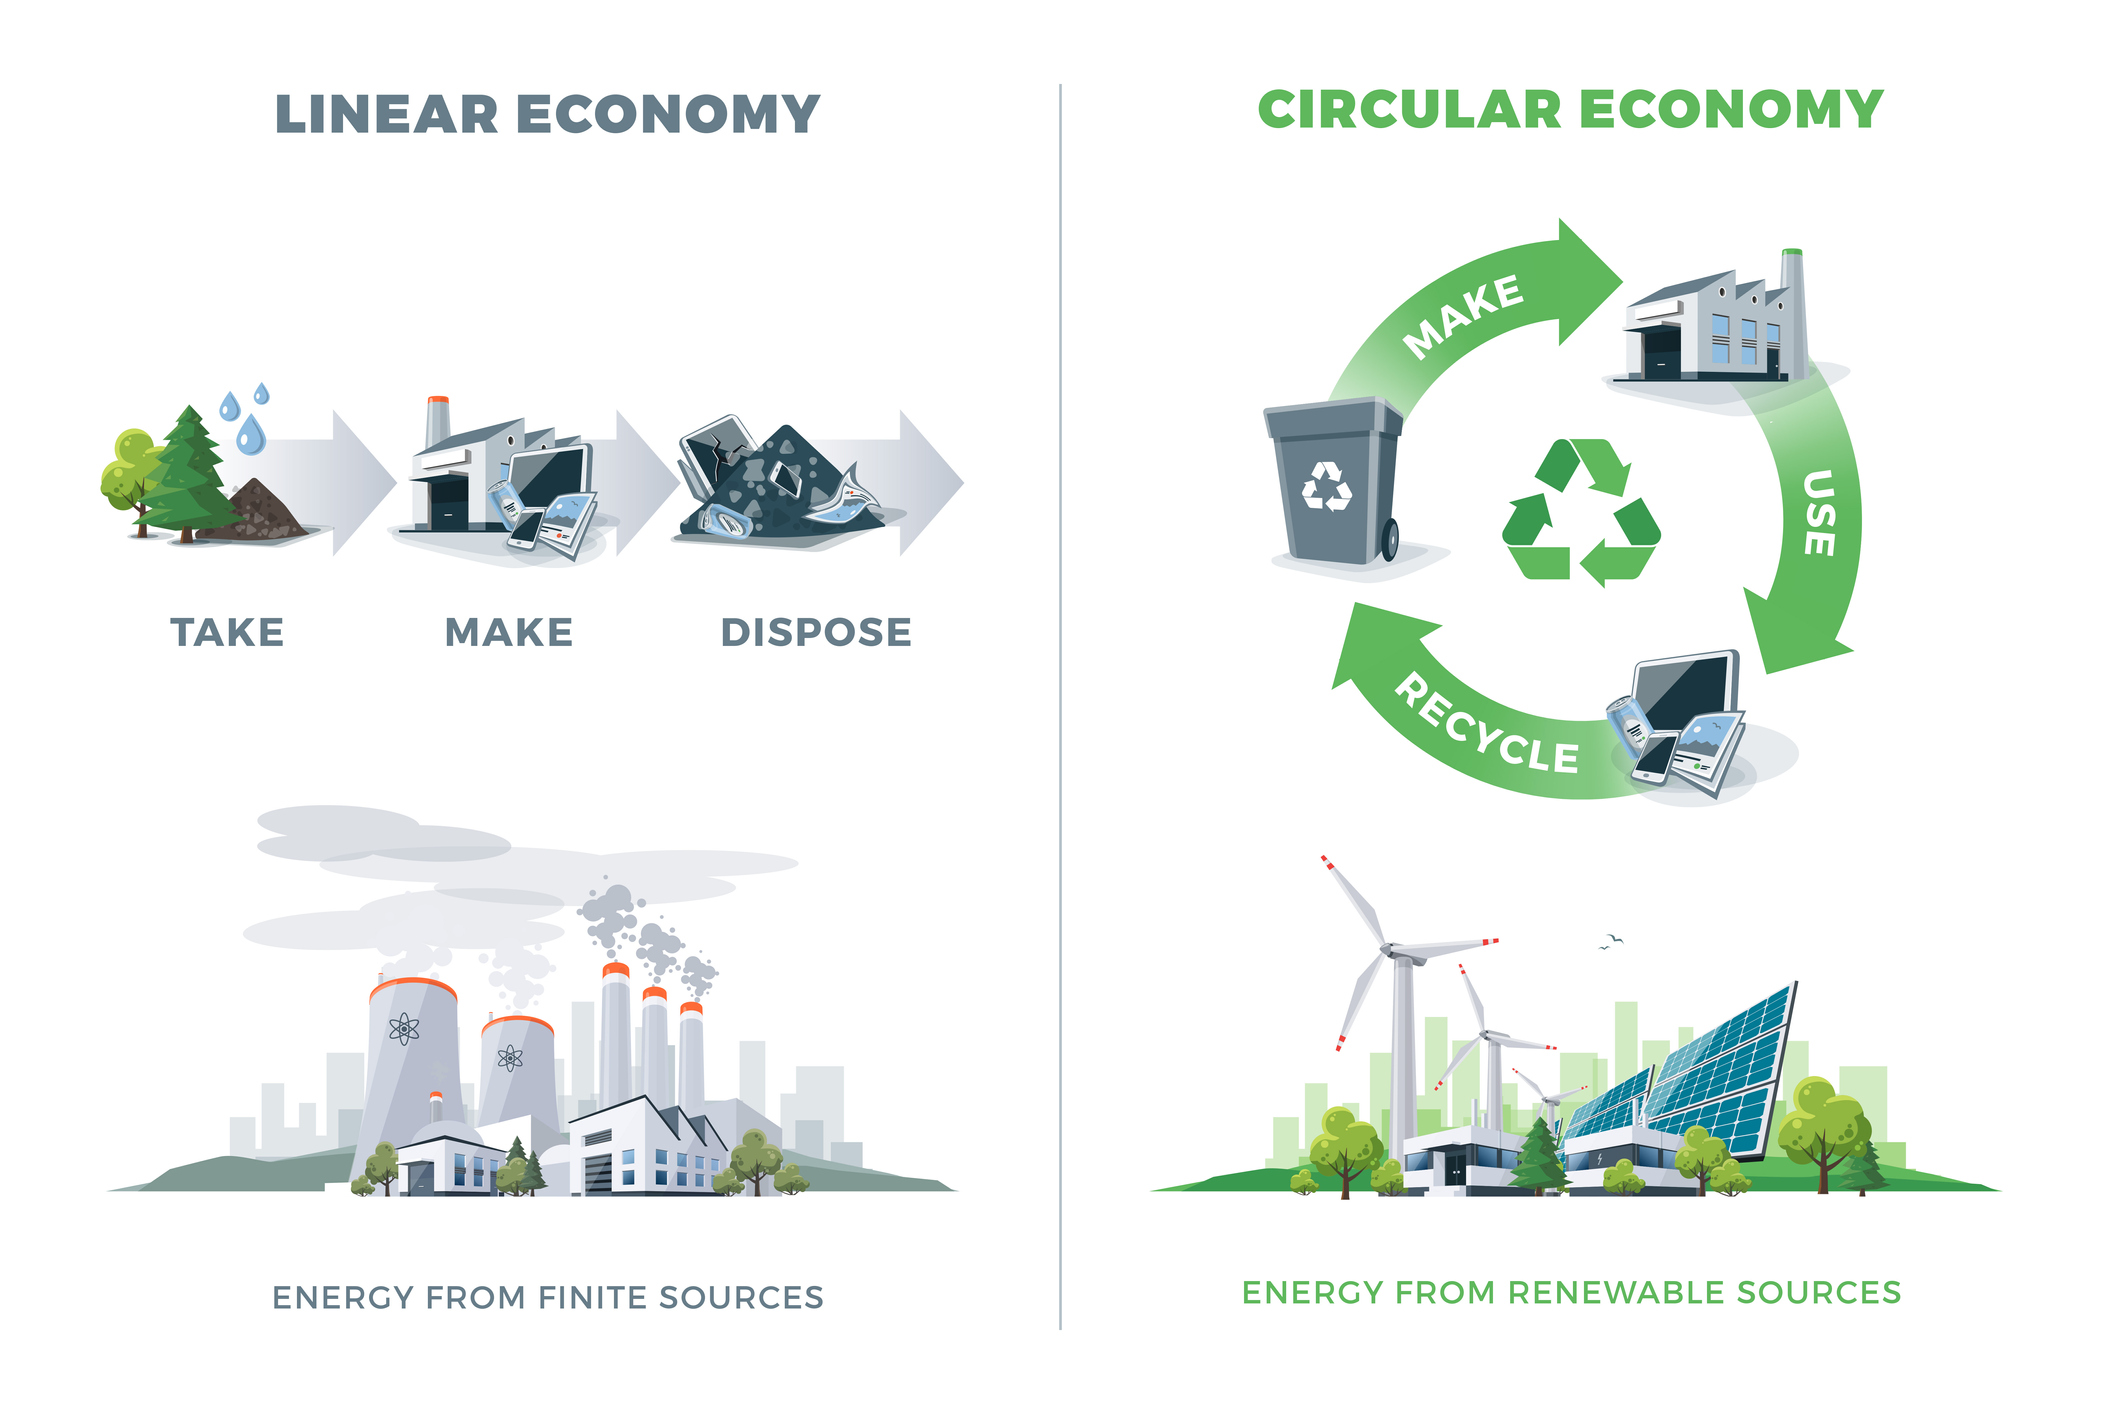 Linear versus circular economy diagram